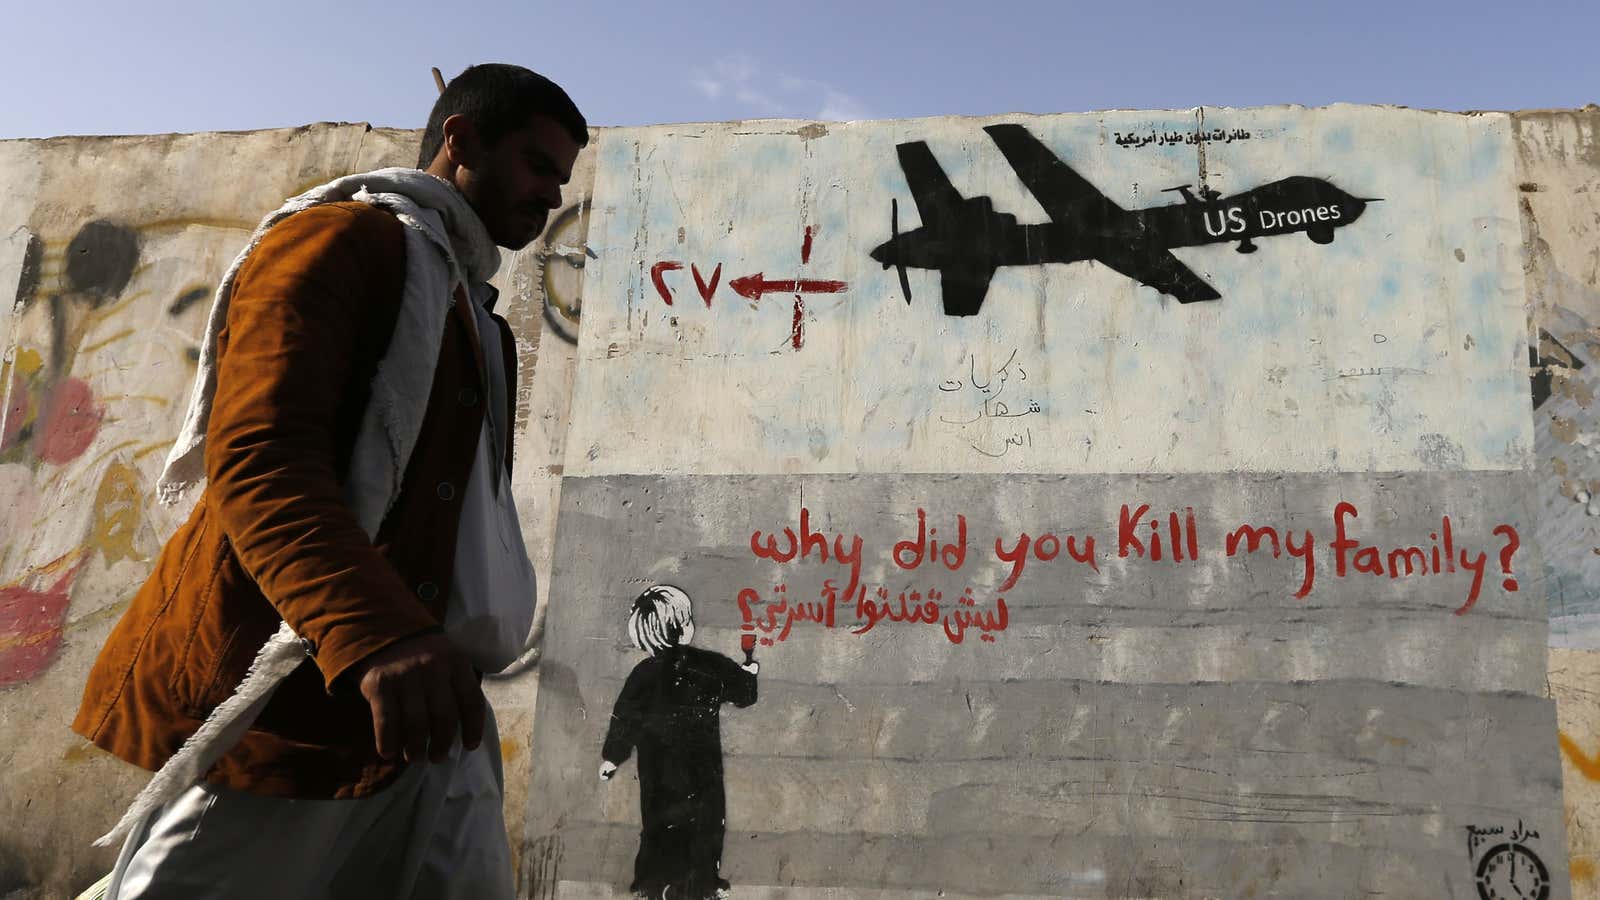 Graffiti denouncing strikes by U.S. drones in Yemen, painted on a wall in Sanaa.